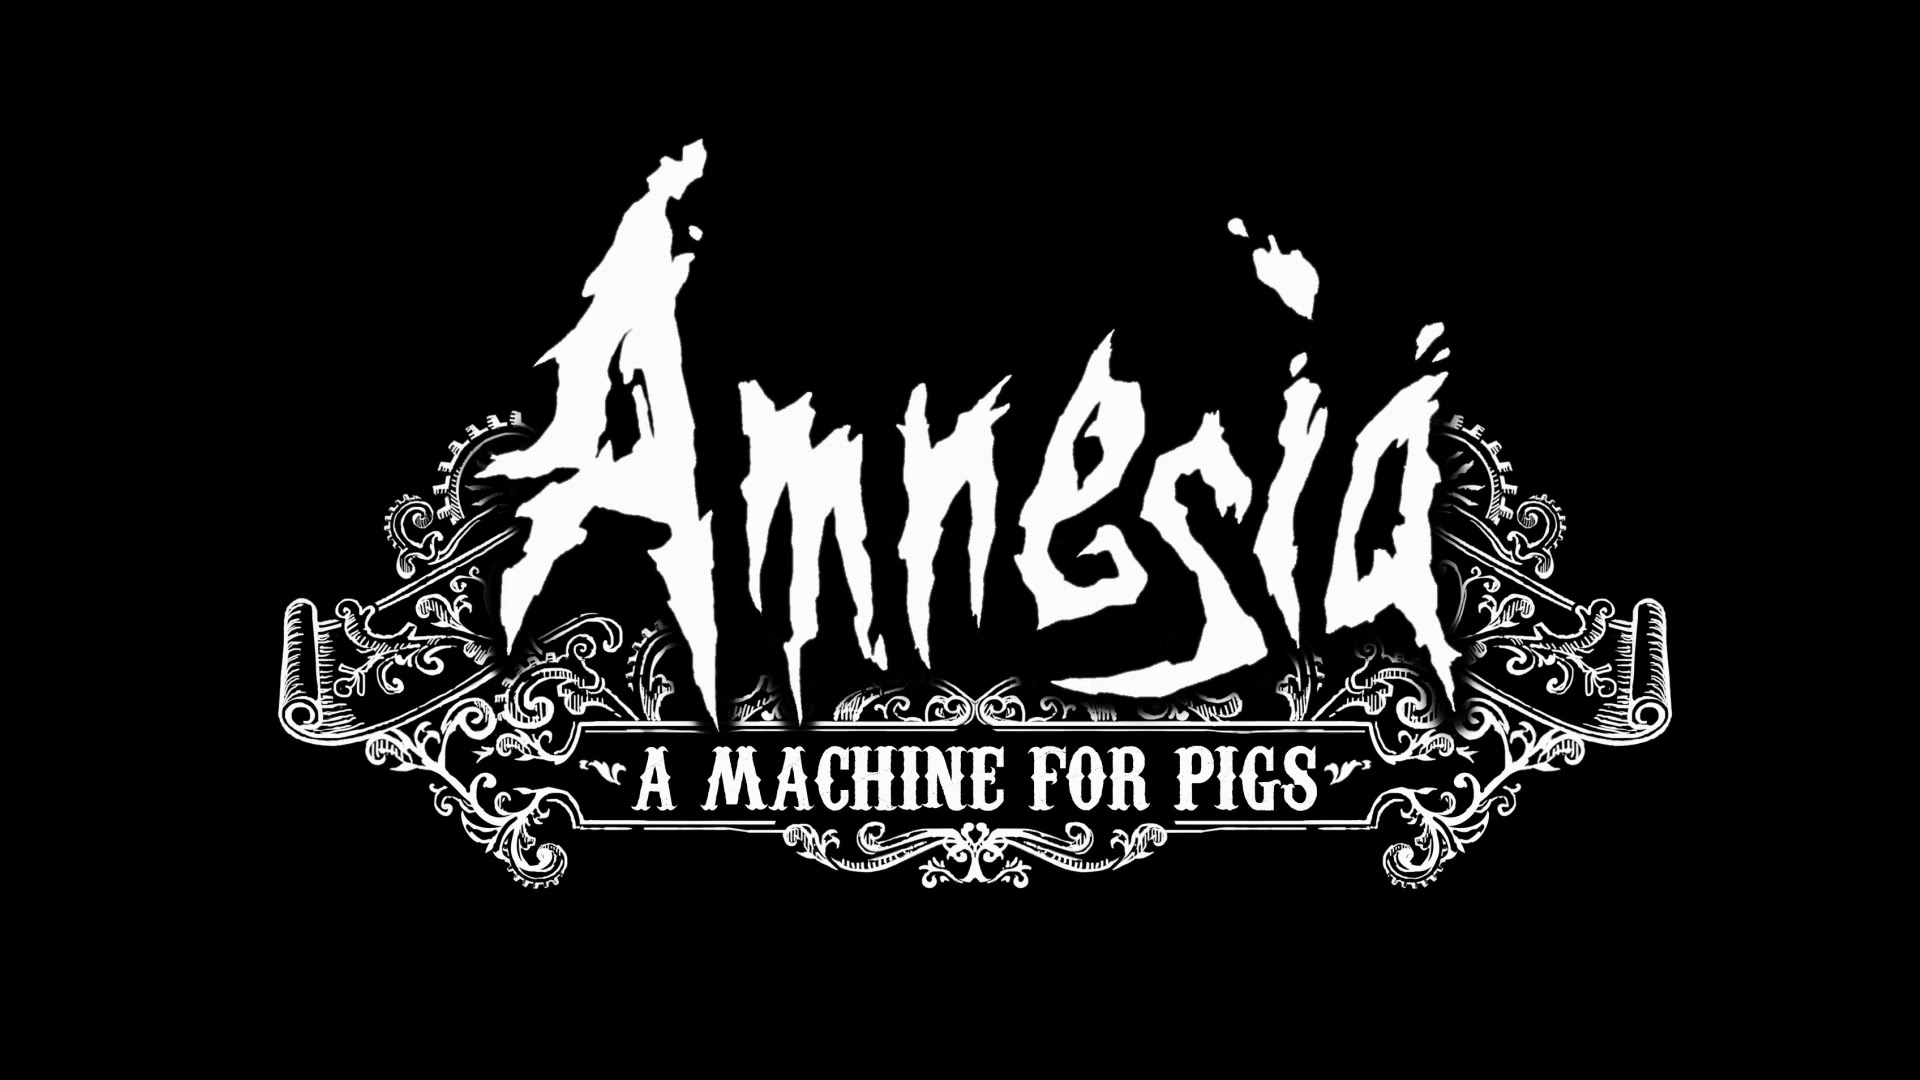 Una partida al billar? Amnesia: A machine for pigs #2 de LópezForn